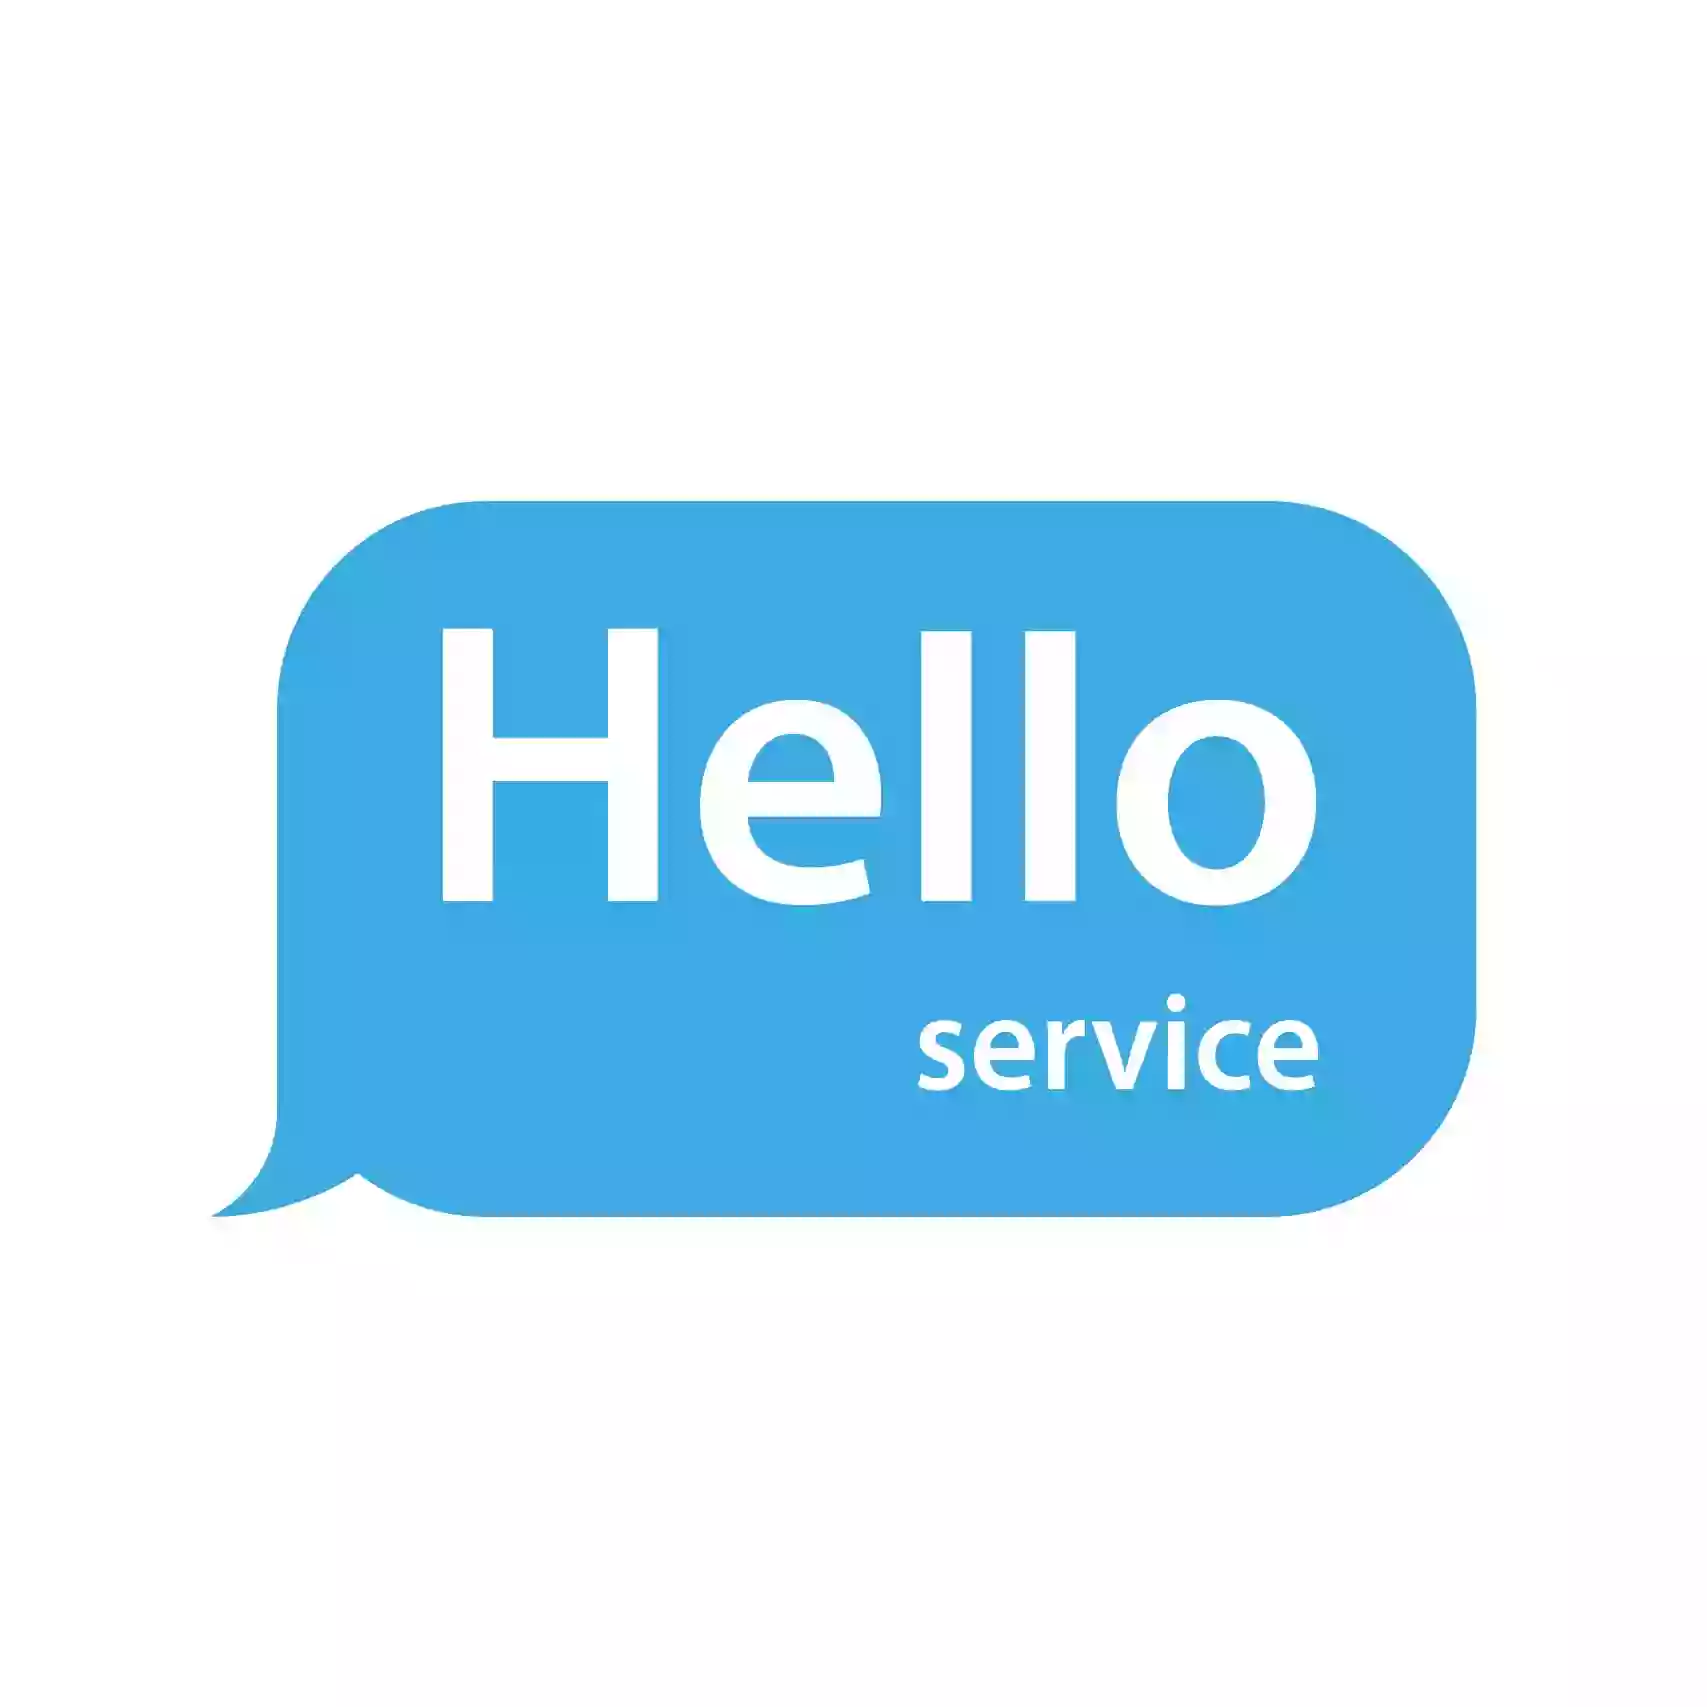 HelloService